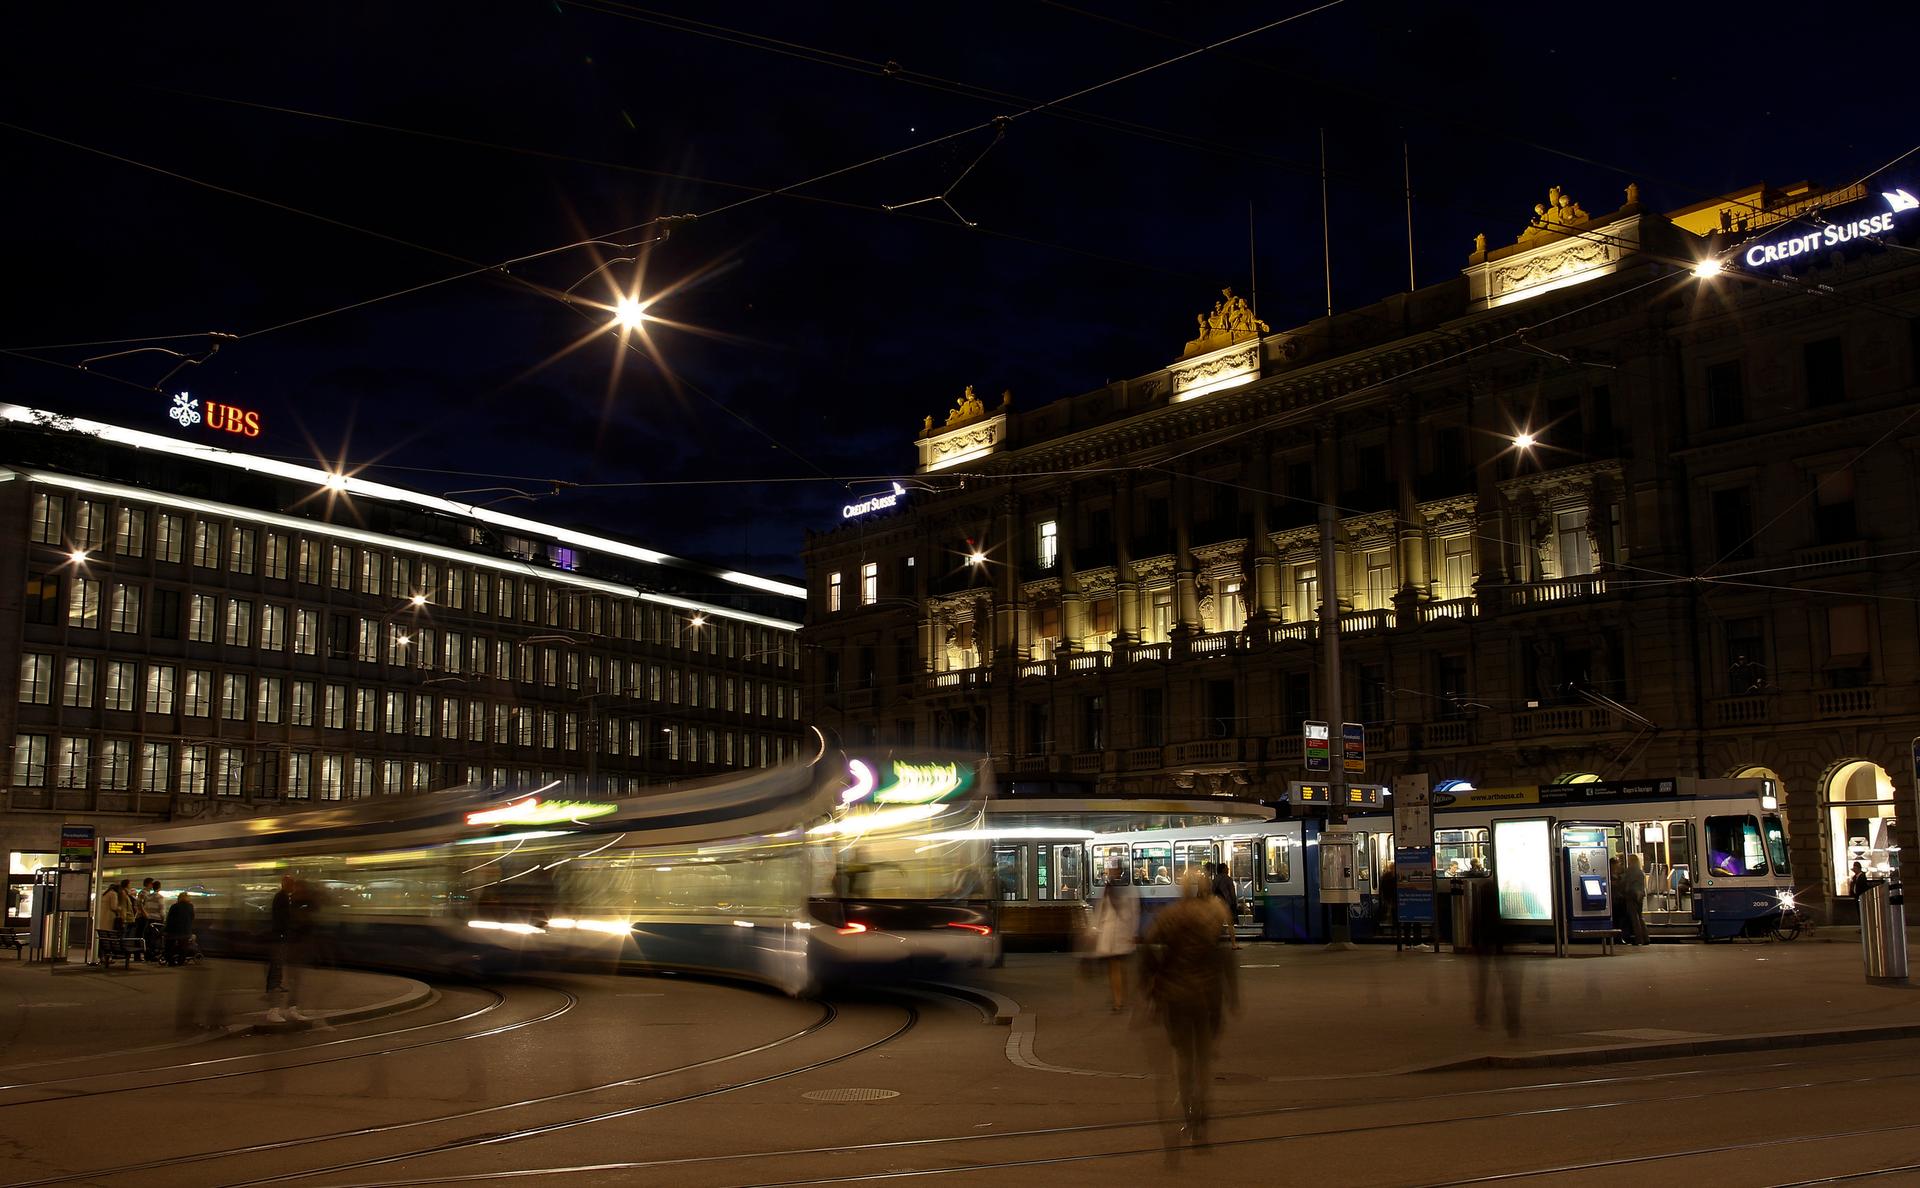 A Credit Suisse office in Zurich, Switzerland. Will the $2.6bn fine make them stop?